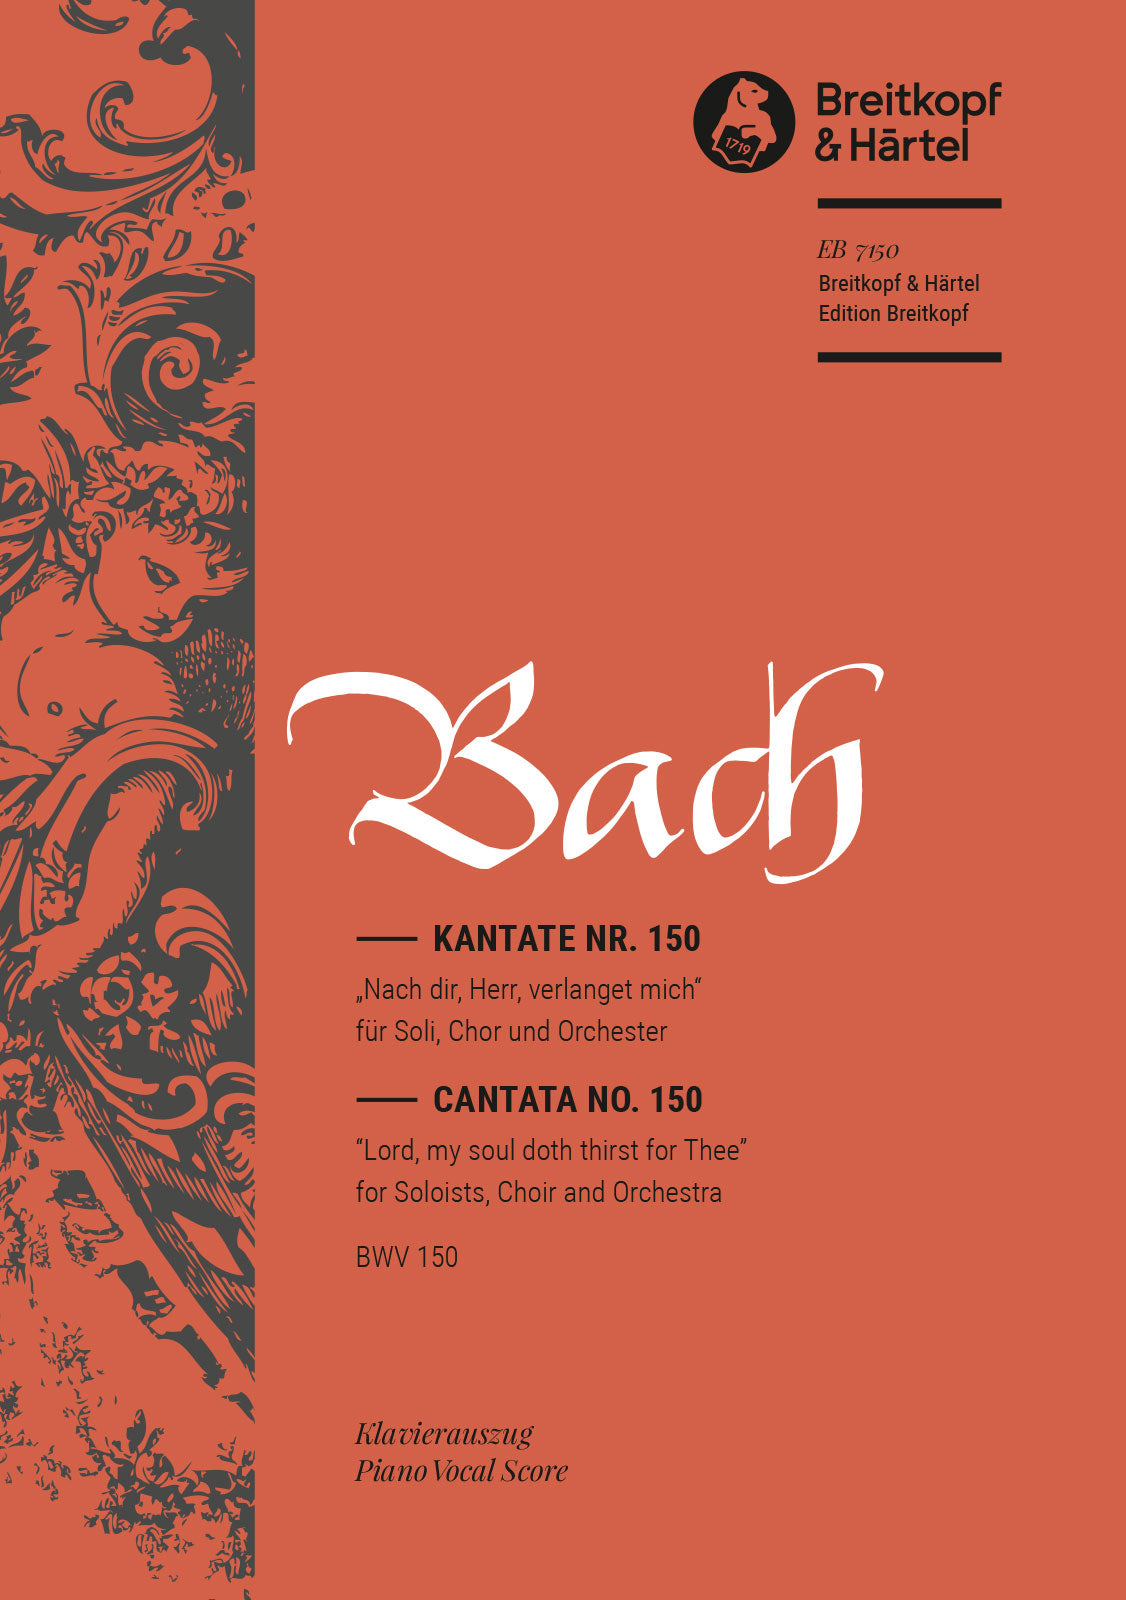 Bach: Nach dir, Herr, verlanget mich, BWV 150